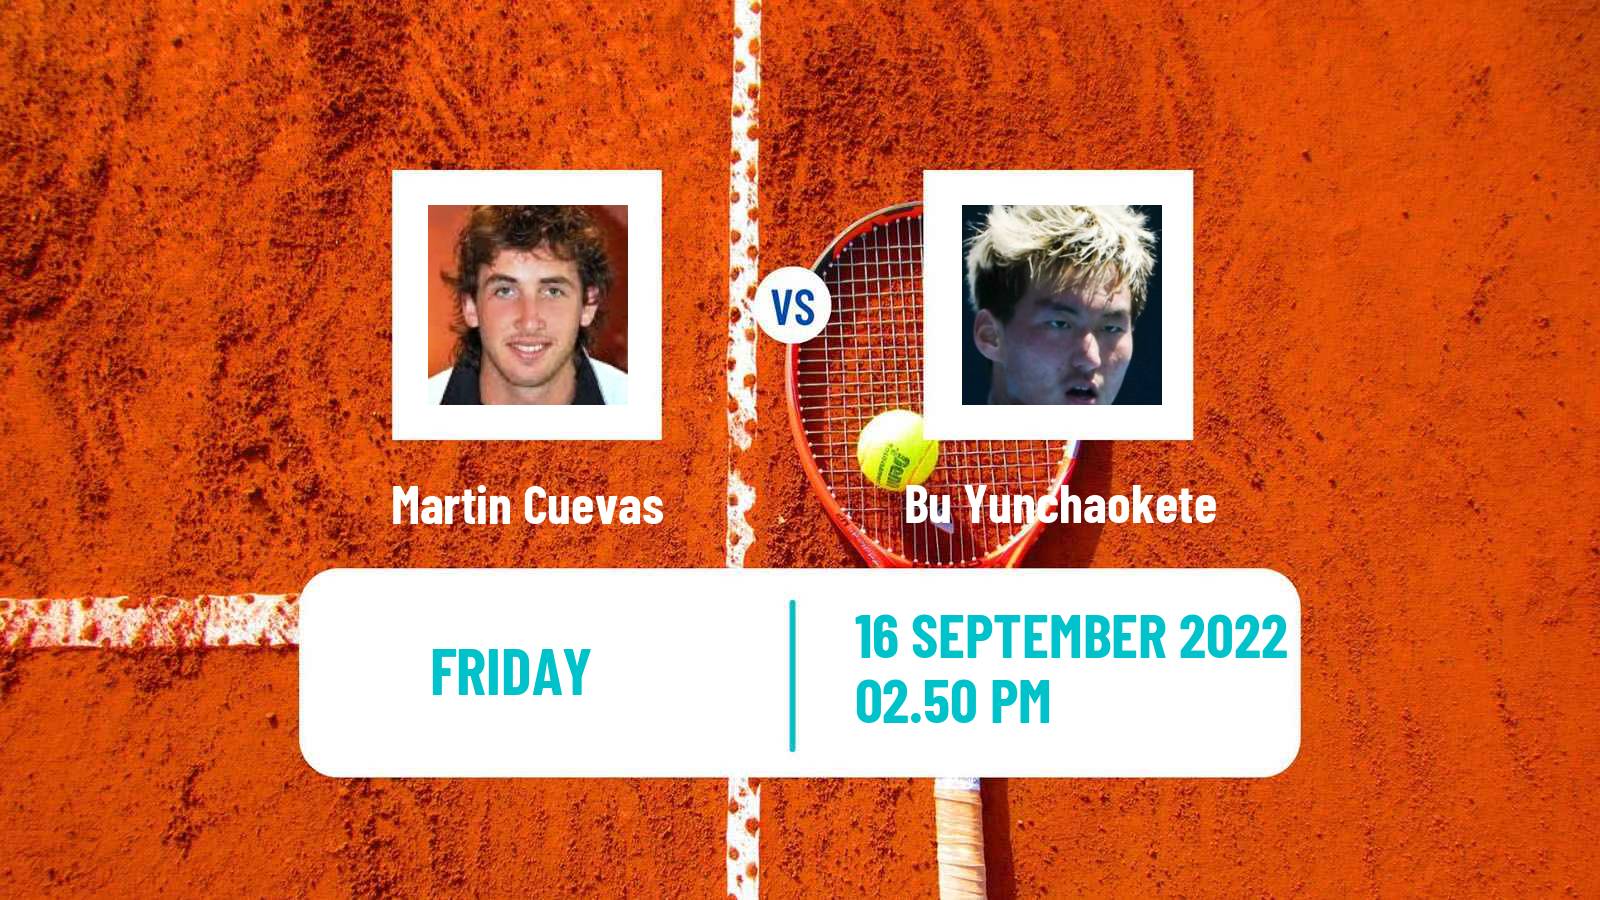 Tennis Davis Cup World Group II Martin Cuevas - Bu Yunchaokete